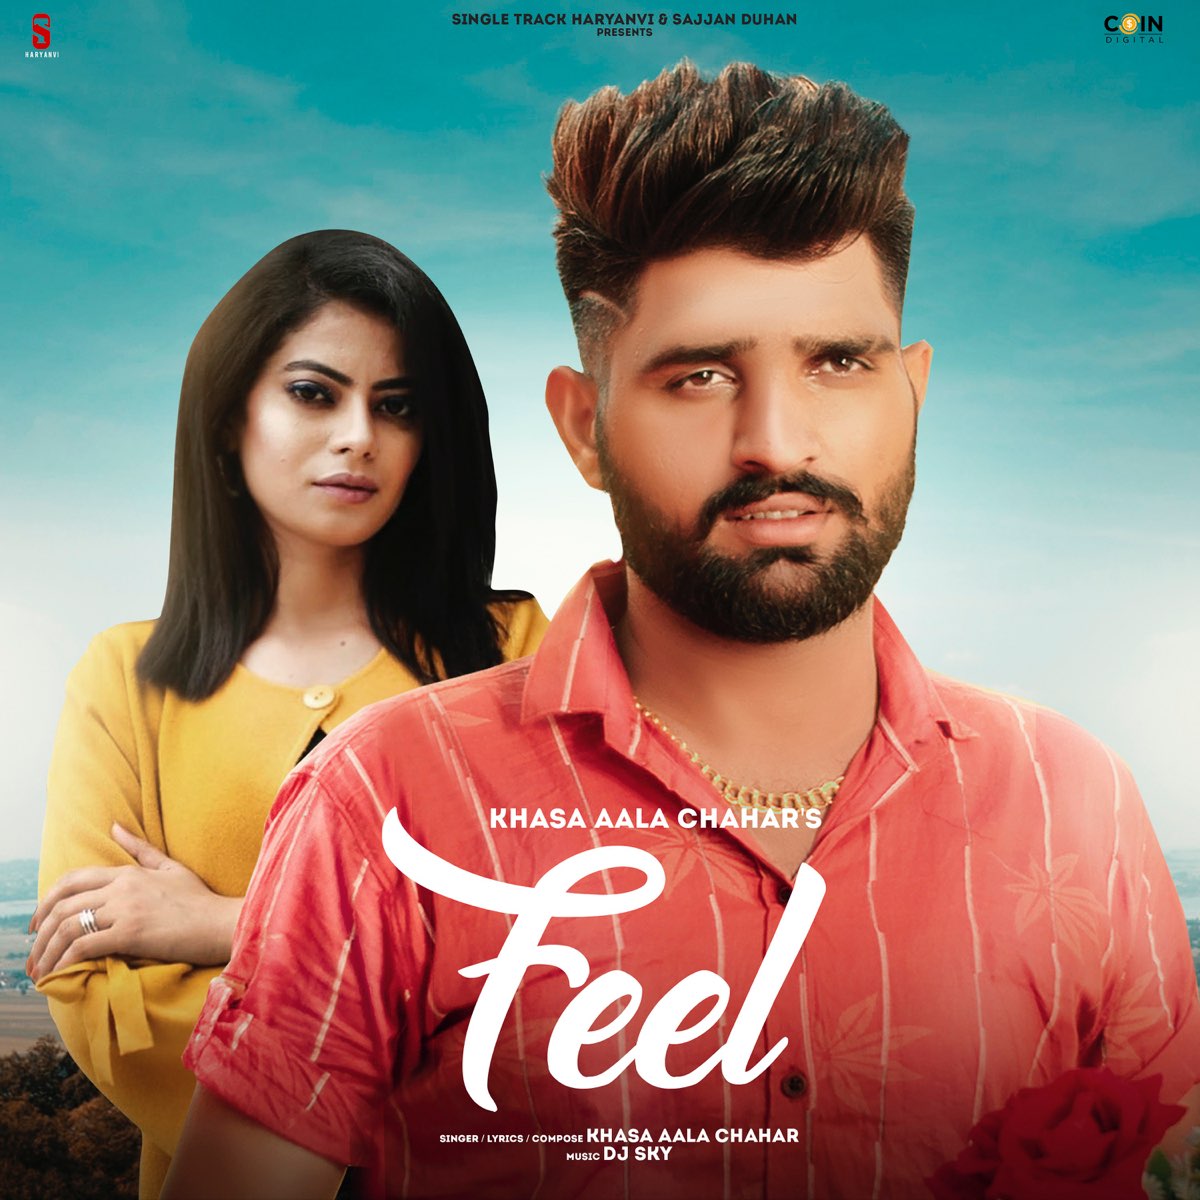 Feel - Single by Khasa Aala Chahar on Apple Music